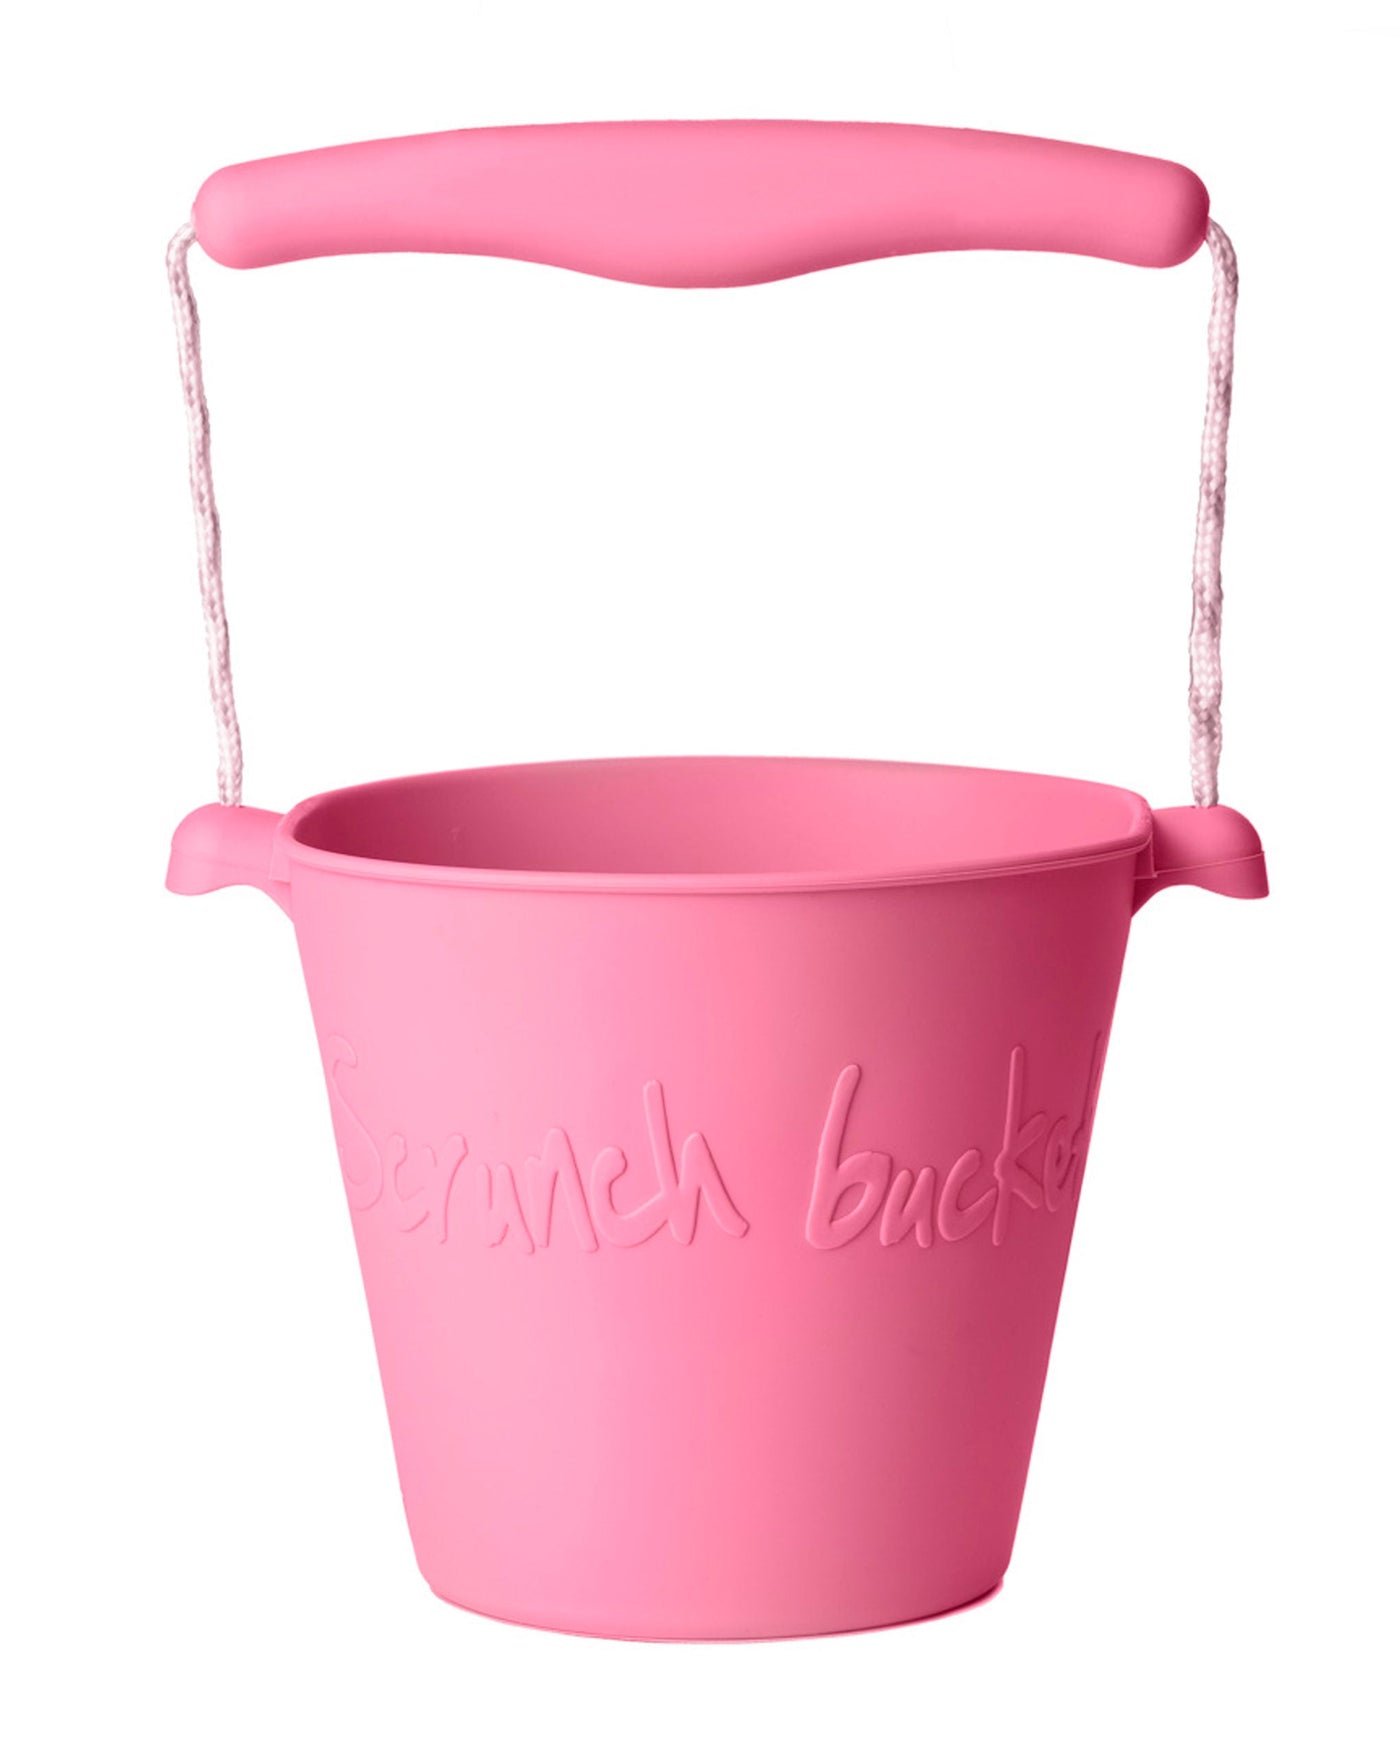 Scrunch Bucket - Flamingo Pink Buckets Scrunch 